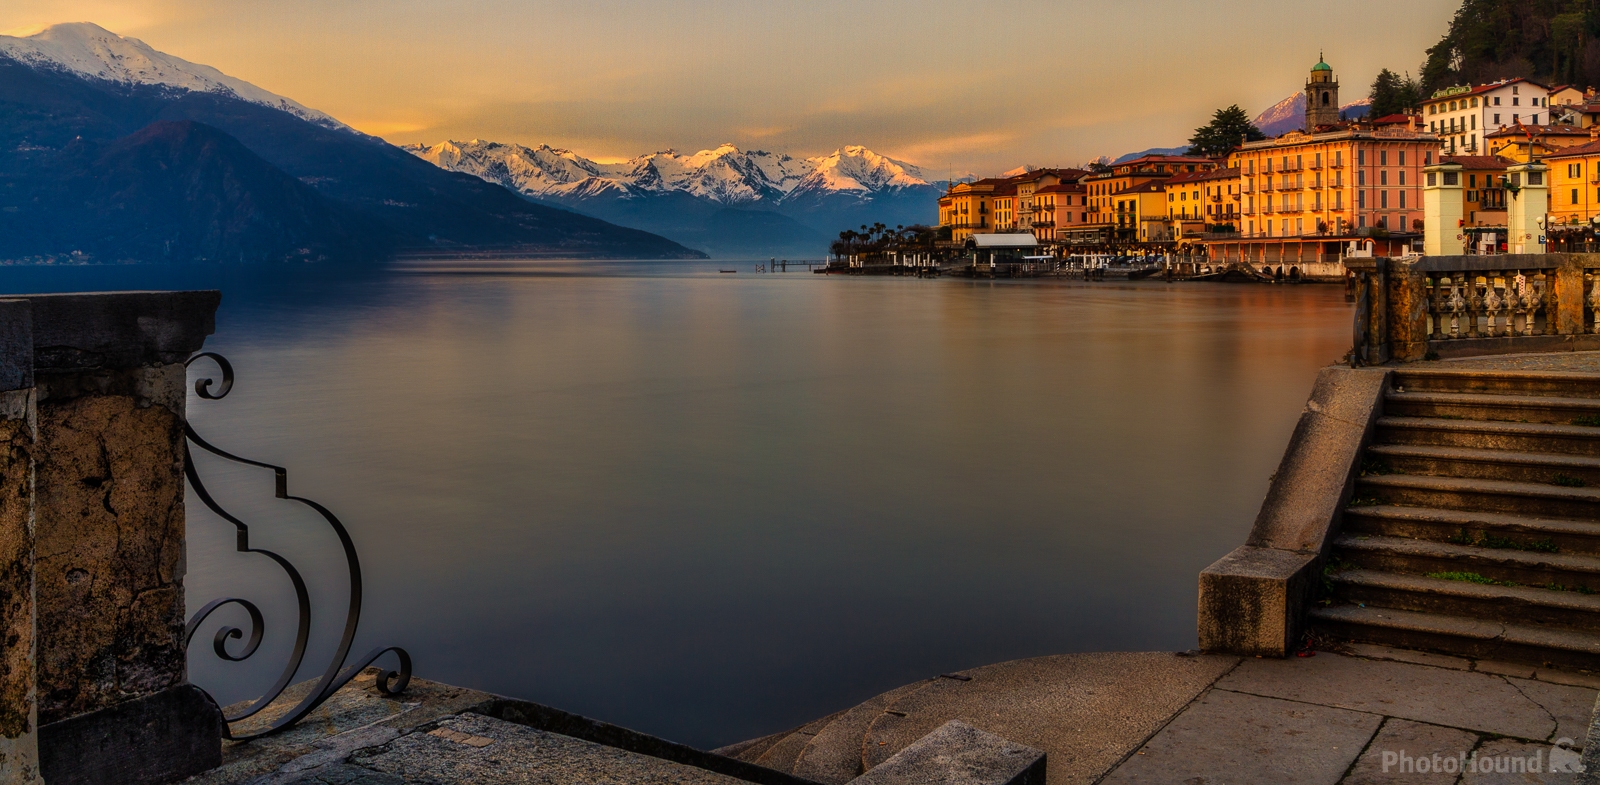 Image of Bellagio from the Lakeshore by Raimondo Giamberduca